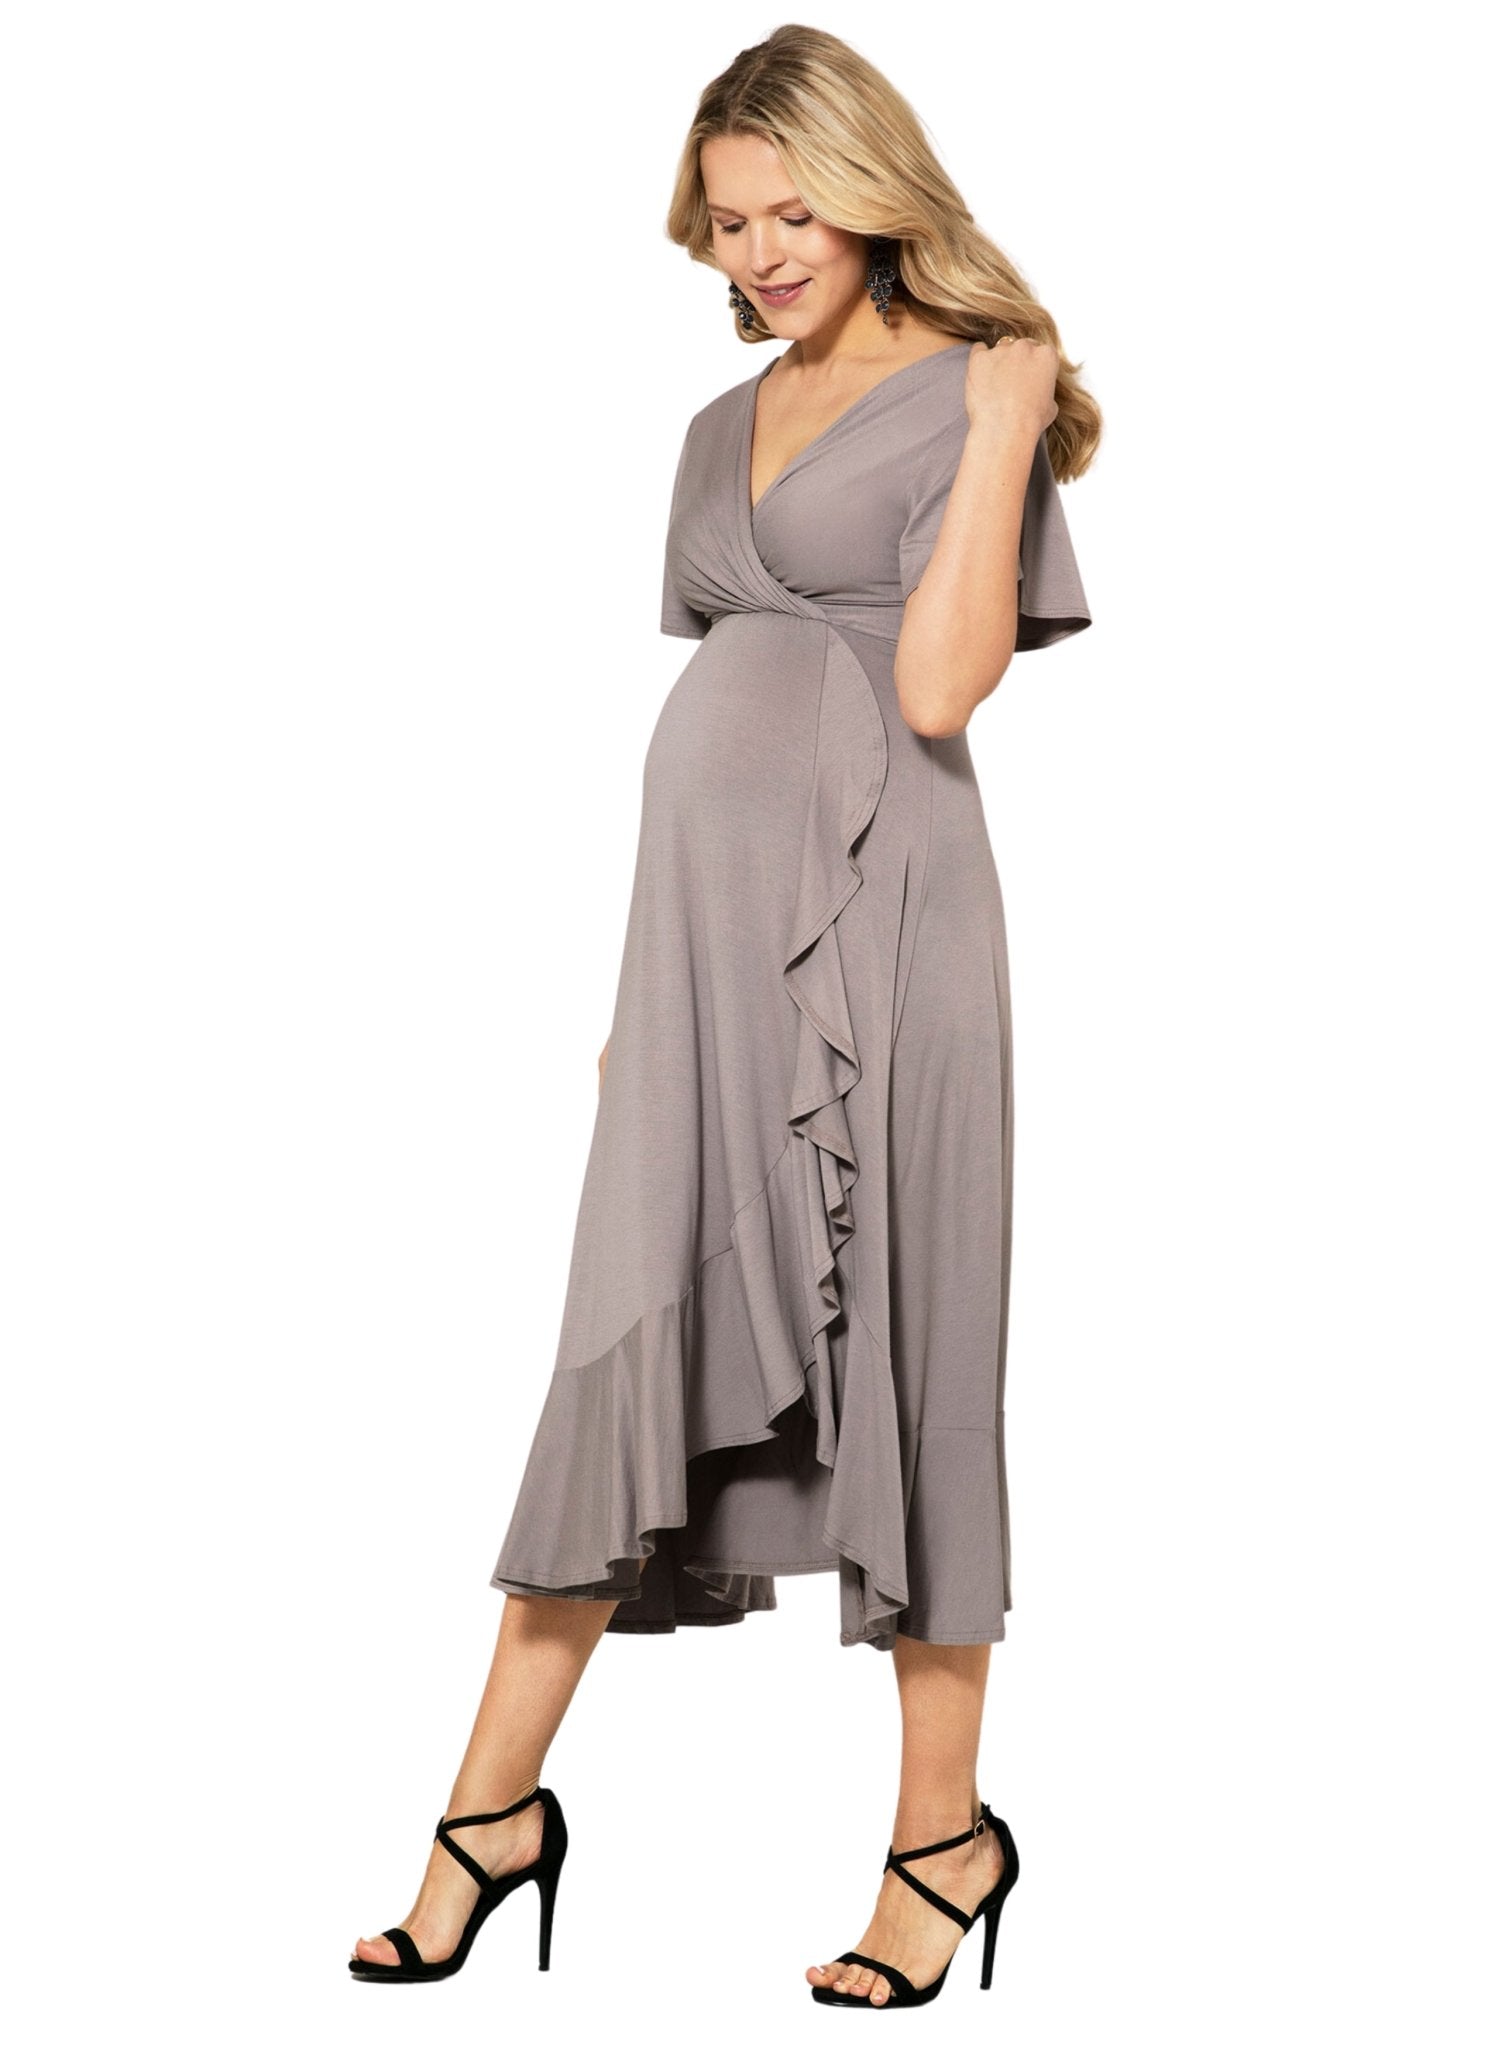 Waterfall Maternity Midi Dress - Taupe Grey - Mums and Bumps